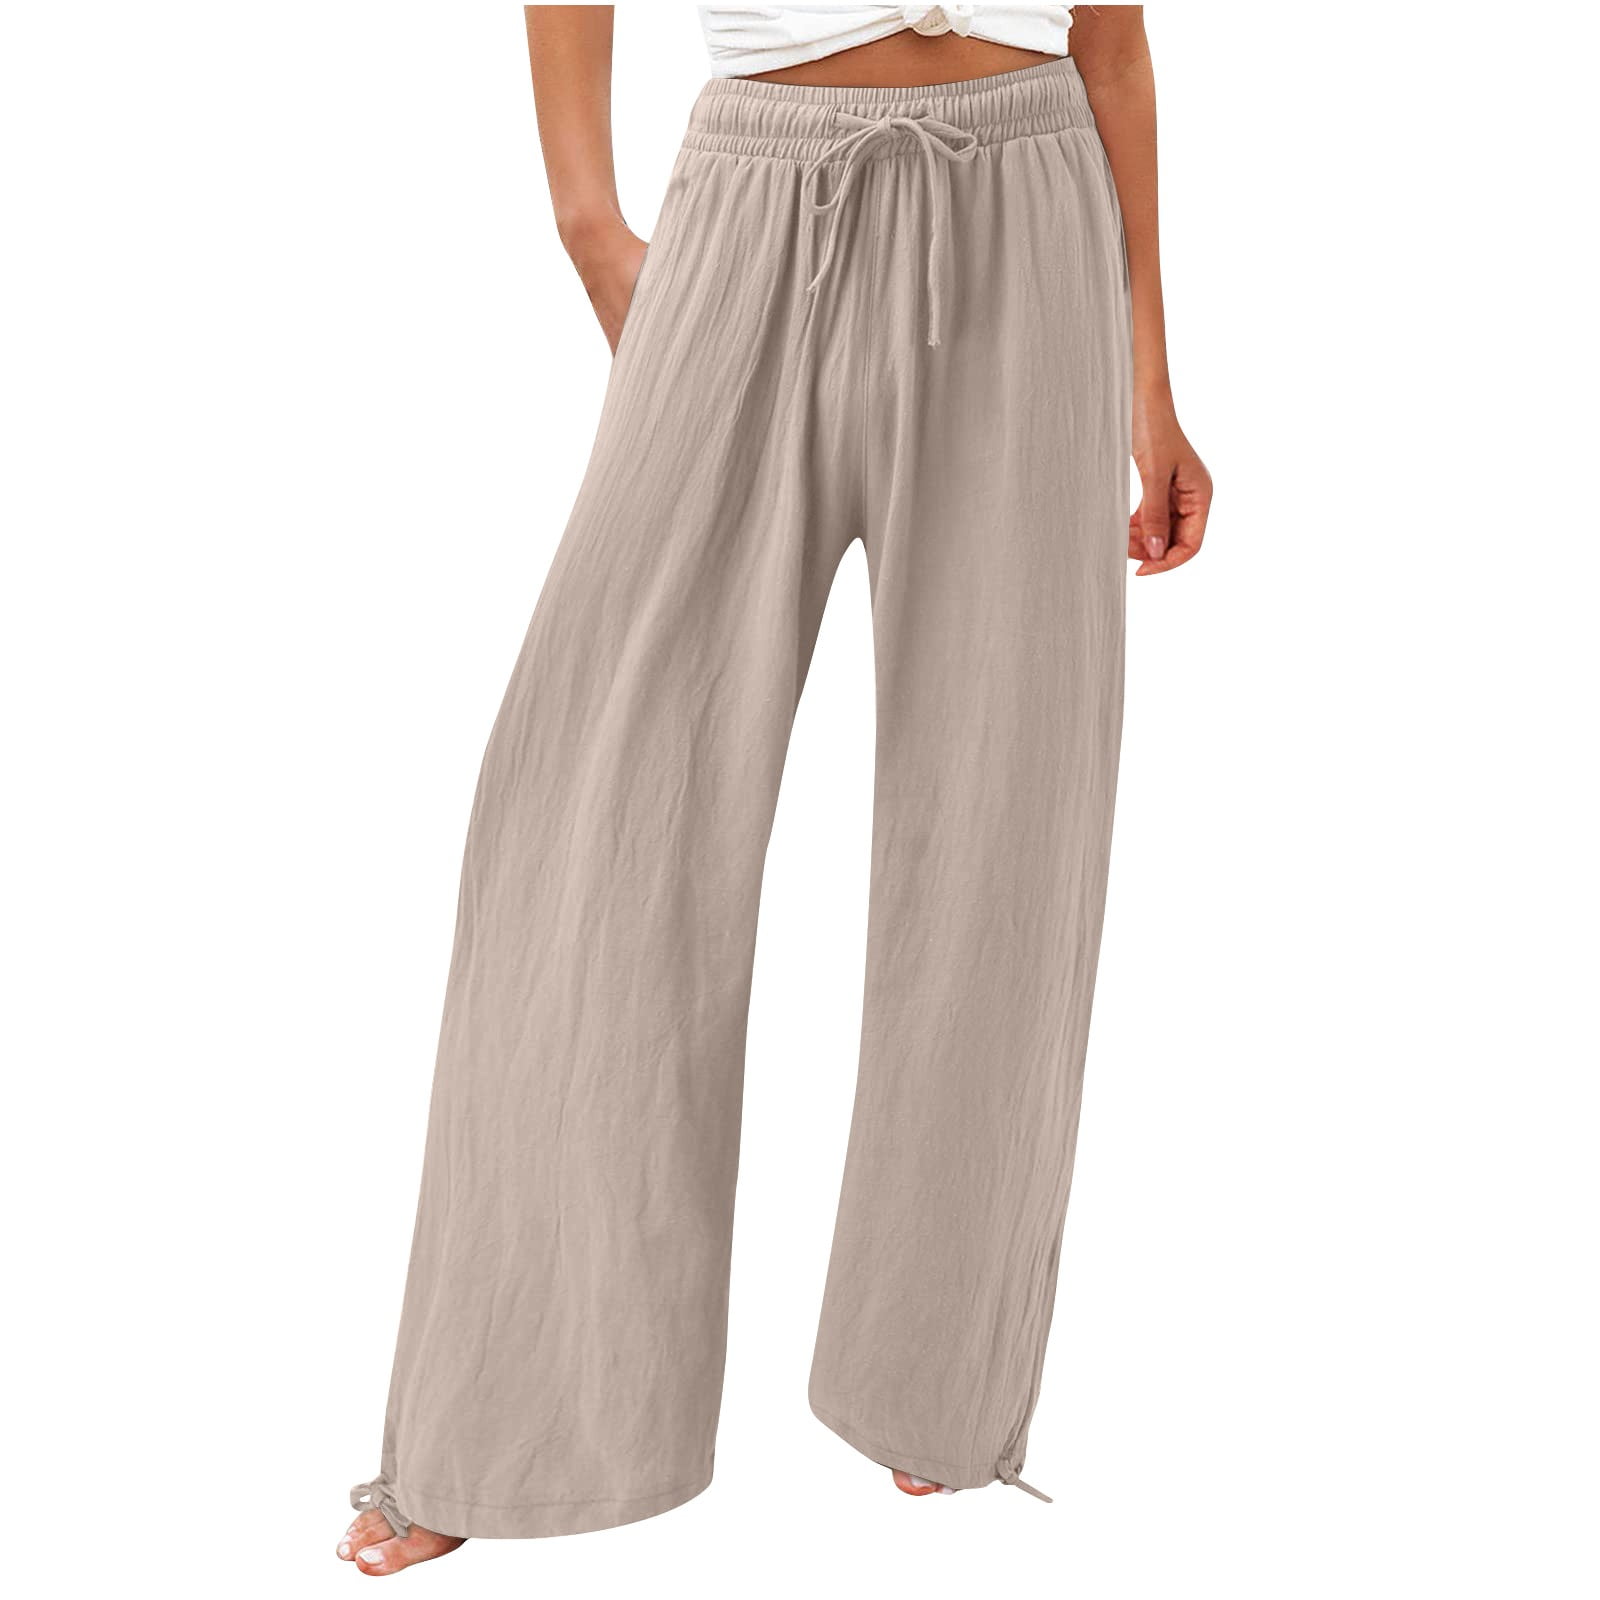 Caracilia Women's Summer Linen Pants